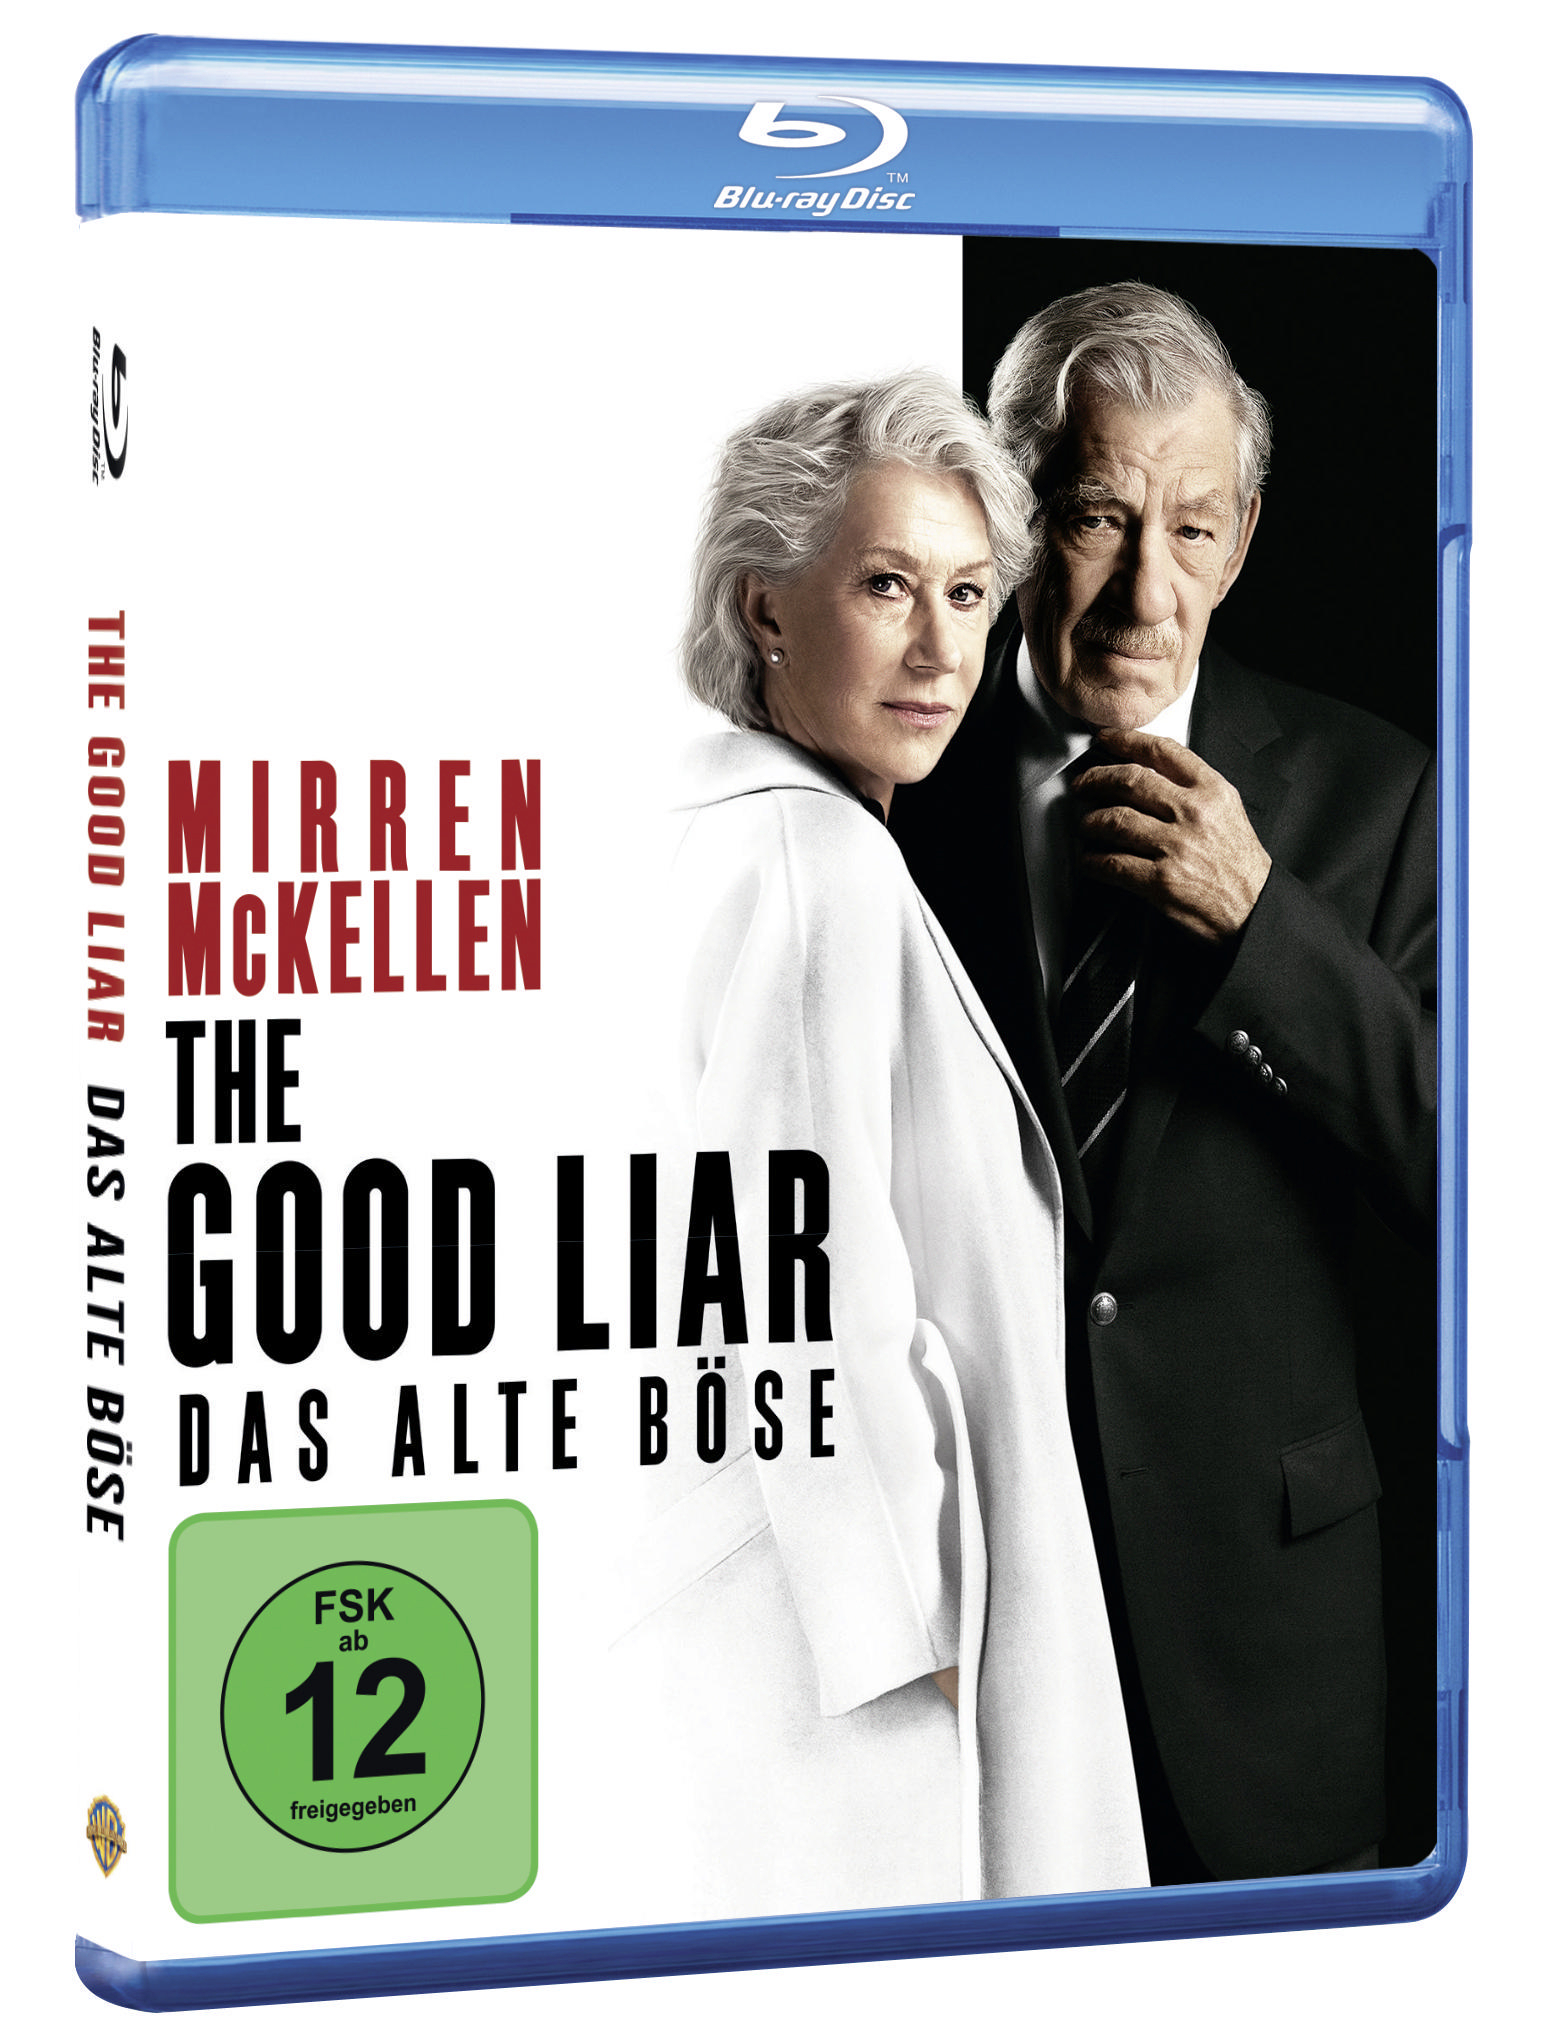 The Good Liar Das alte Blu-ray - Böse